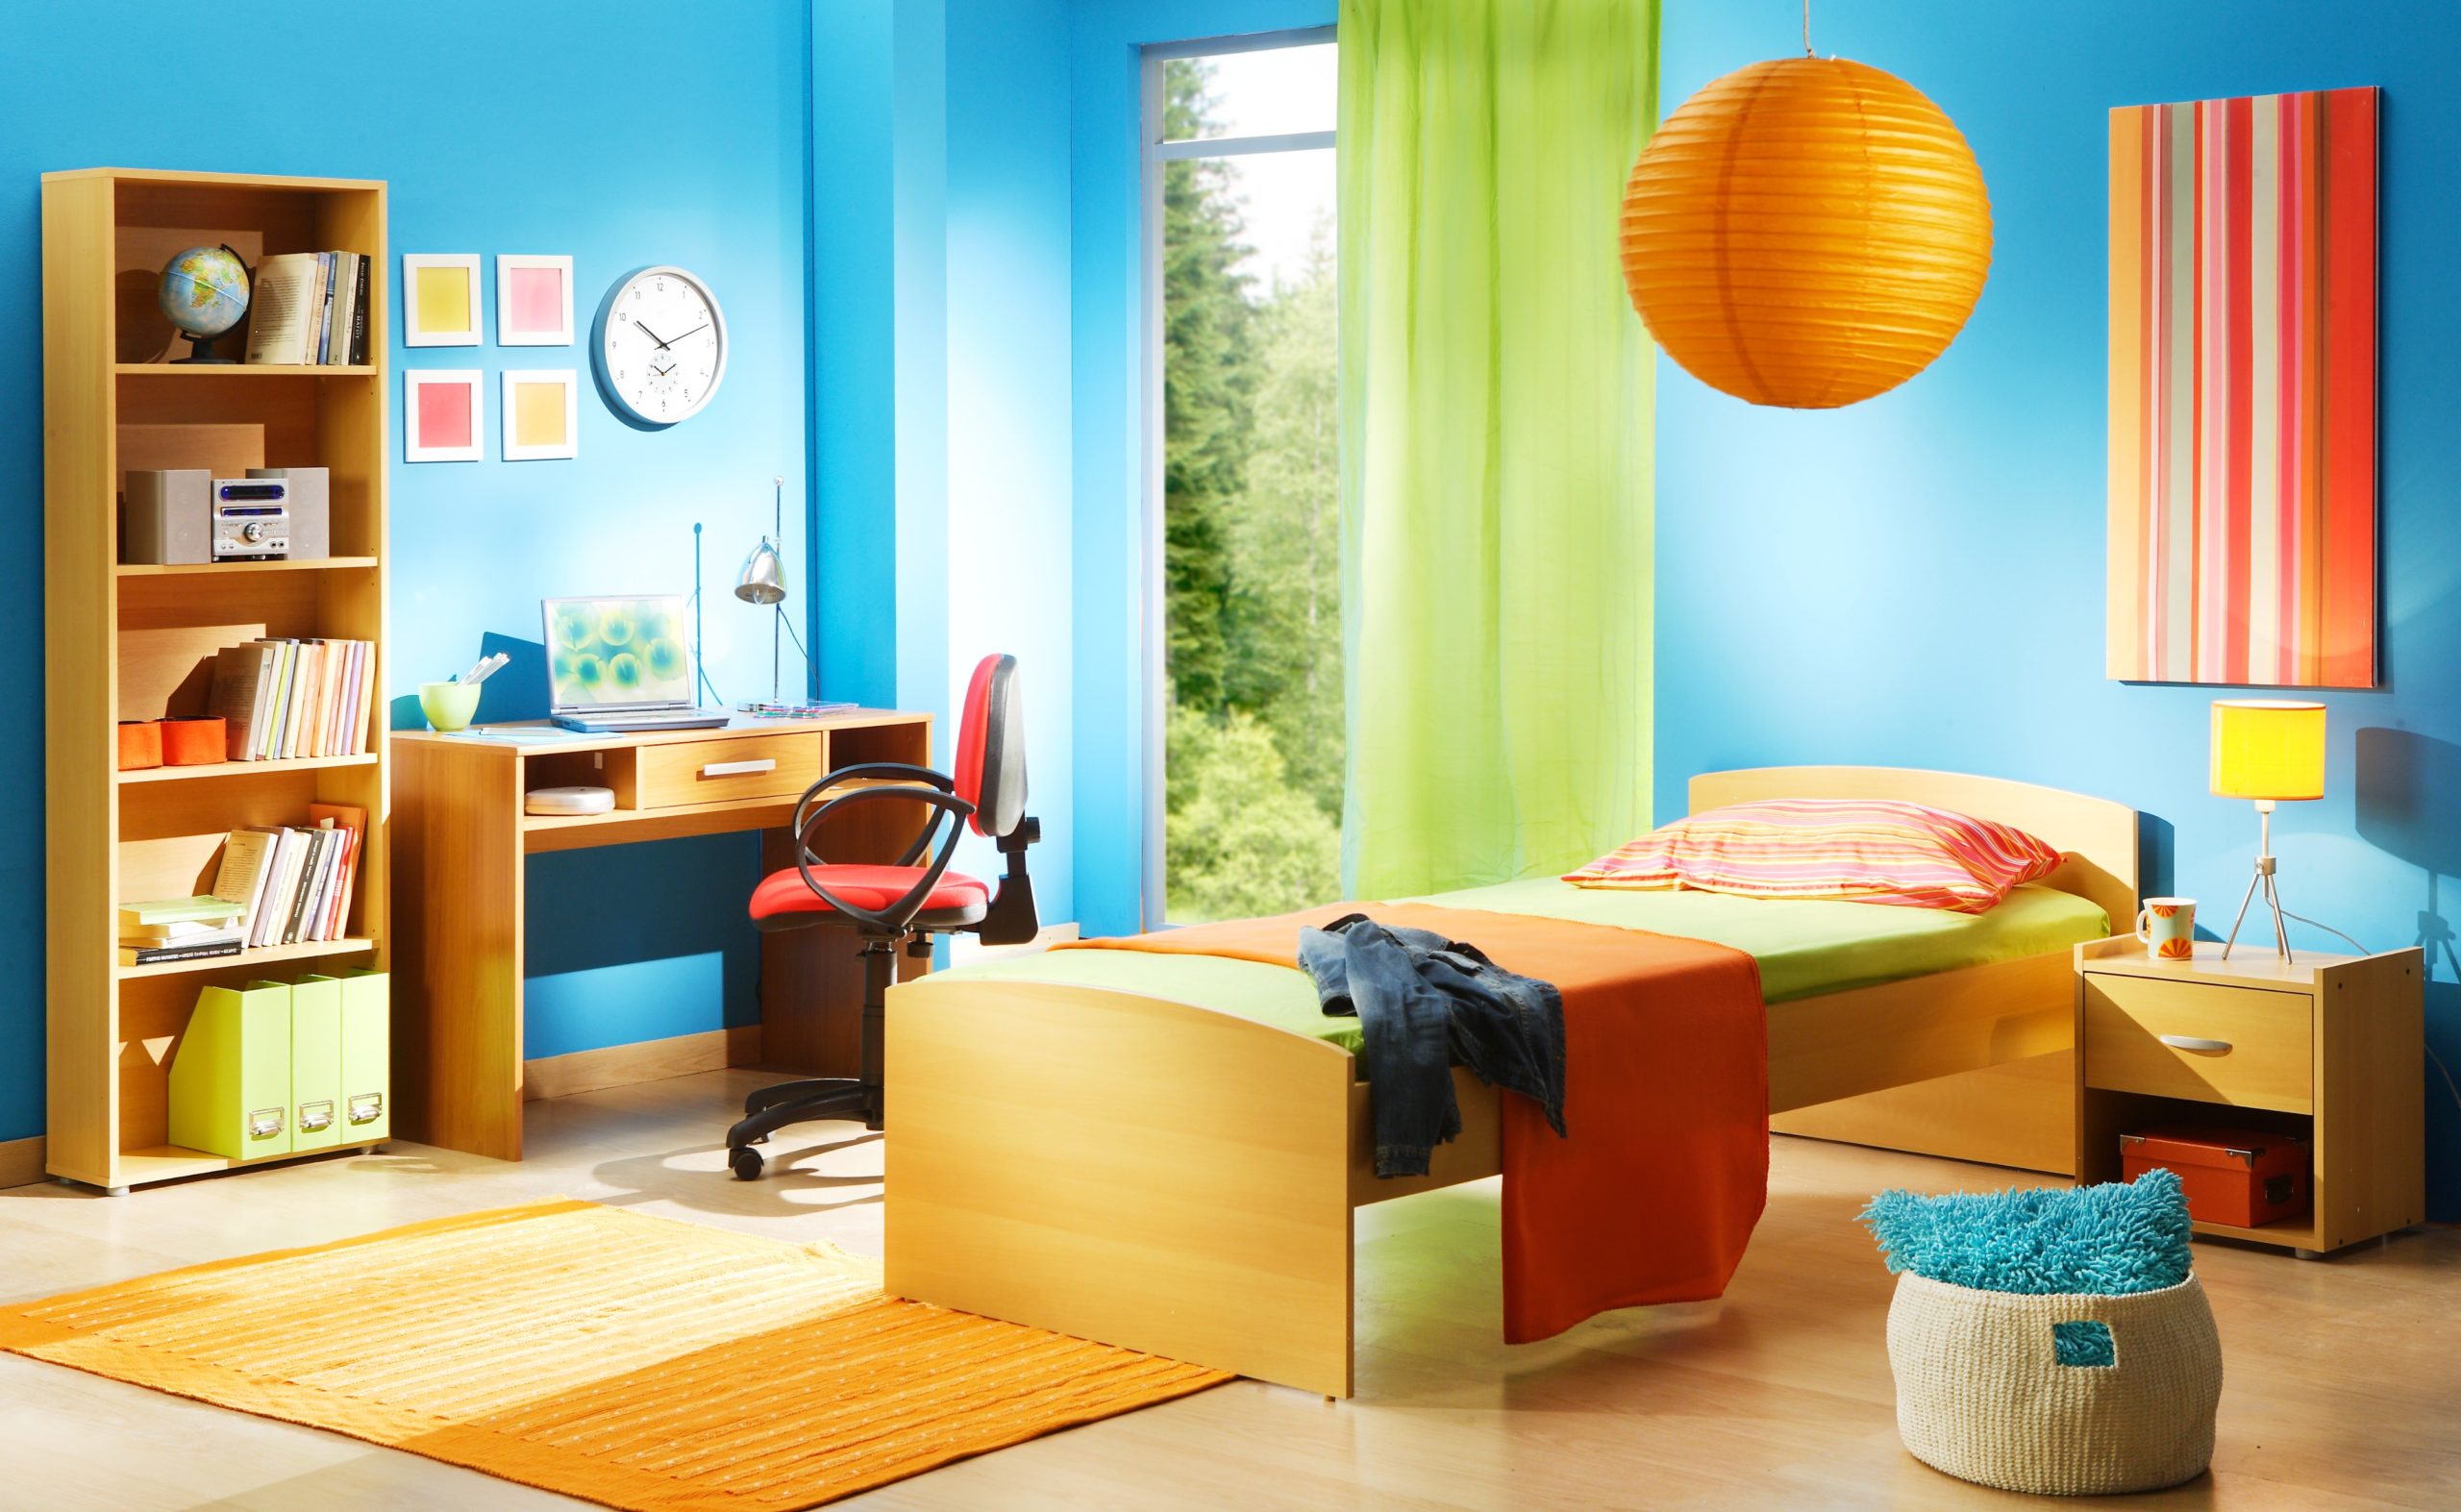 <img src="blue.jpg" alt="blue kids bedroom with green curtains"/> 